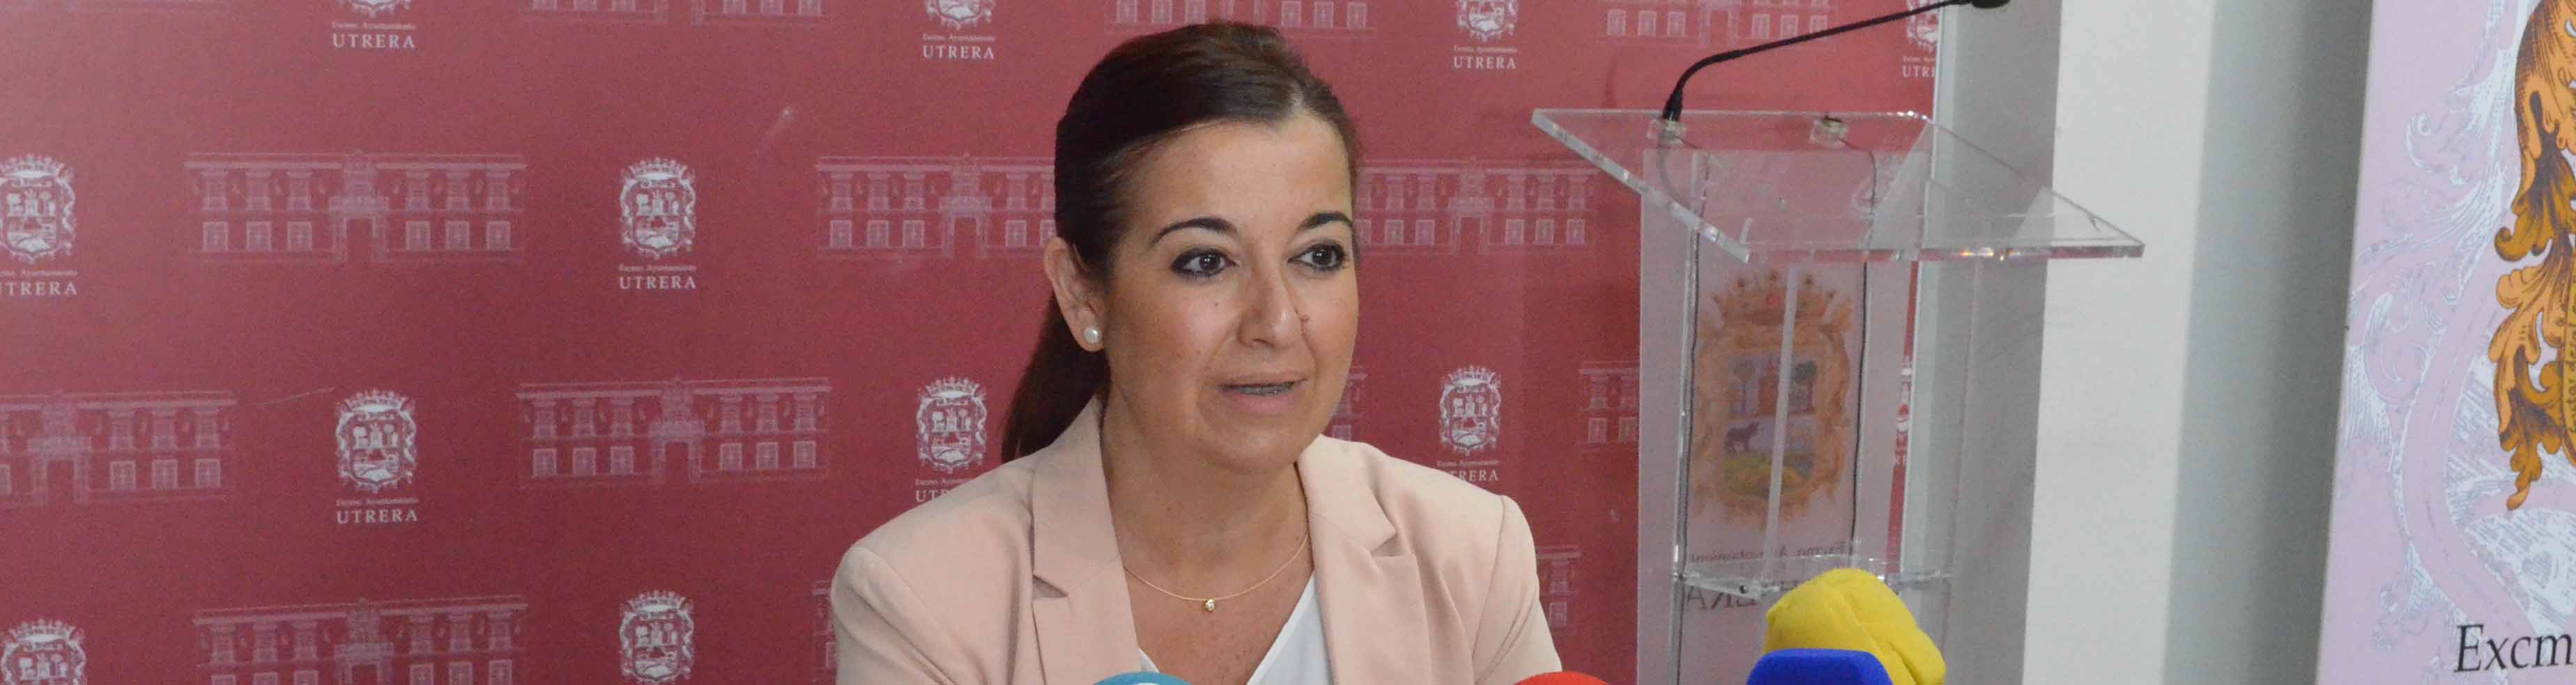 La concejal utrerana Carmen Cabra (PSOE)